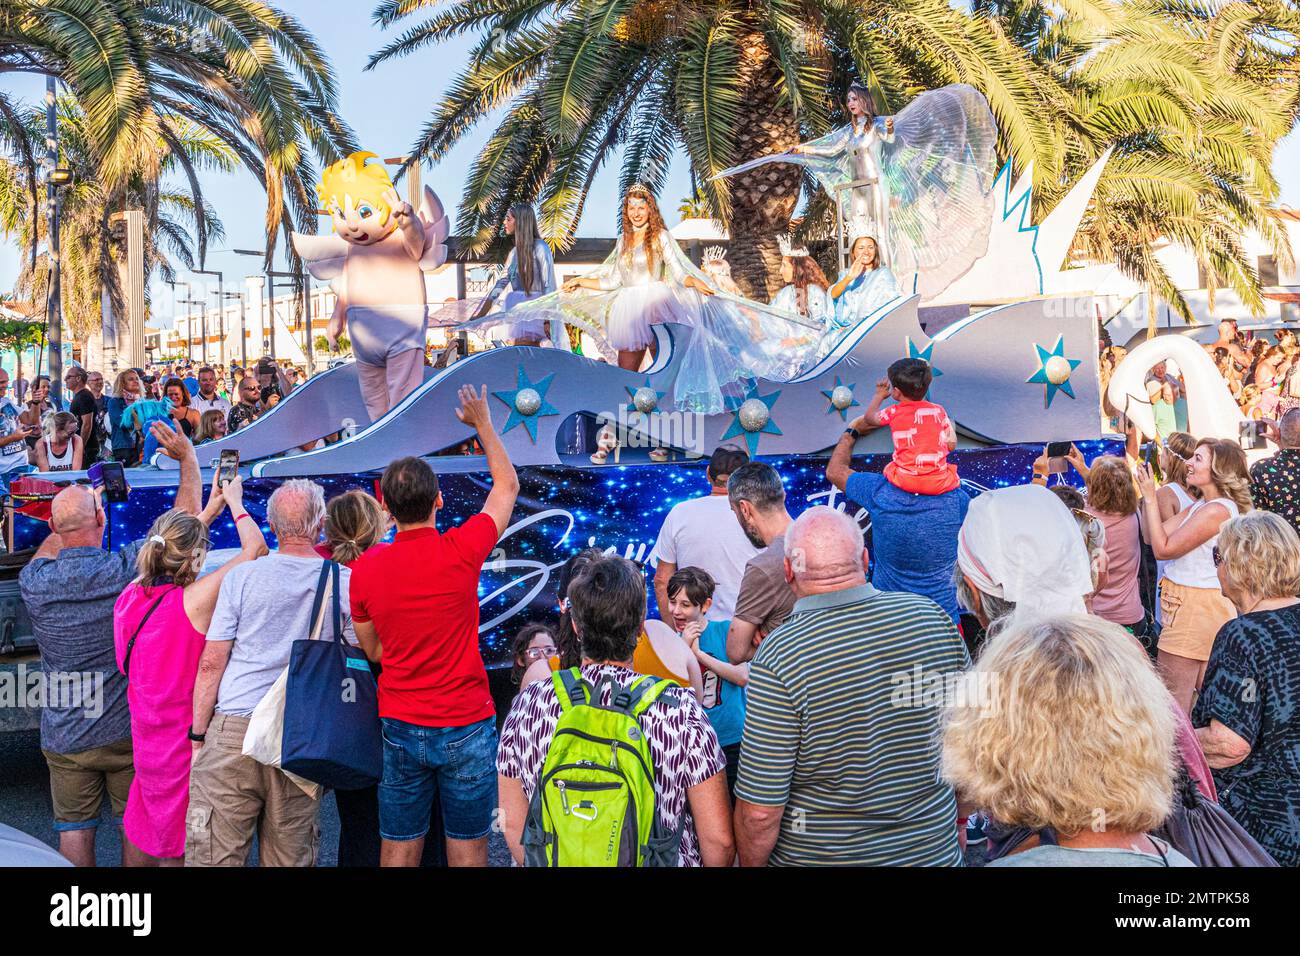 Eine der Festwagen in der traditionellen spanischen Three Kings Parade (Cabalgata de los Reyes Magos) am 5. Januar in Caleta de Fuste, Fuerteventura Stockfoto